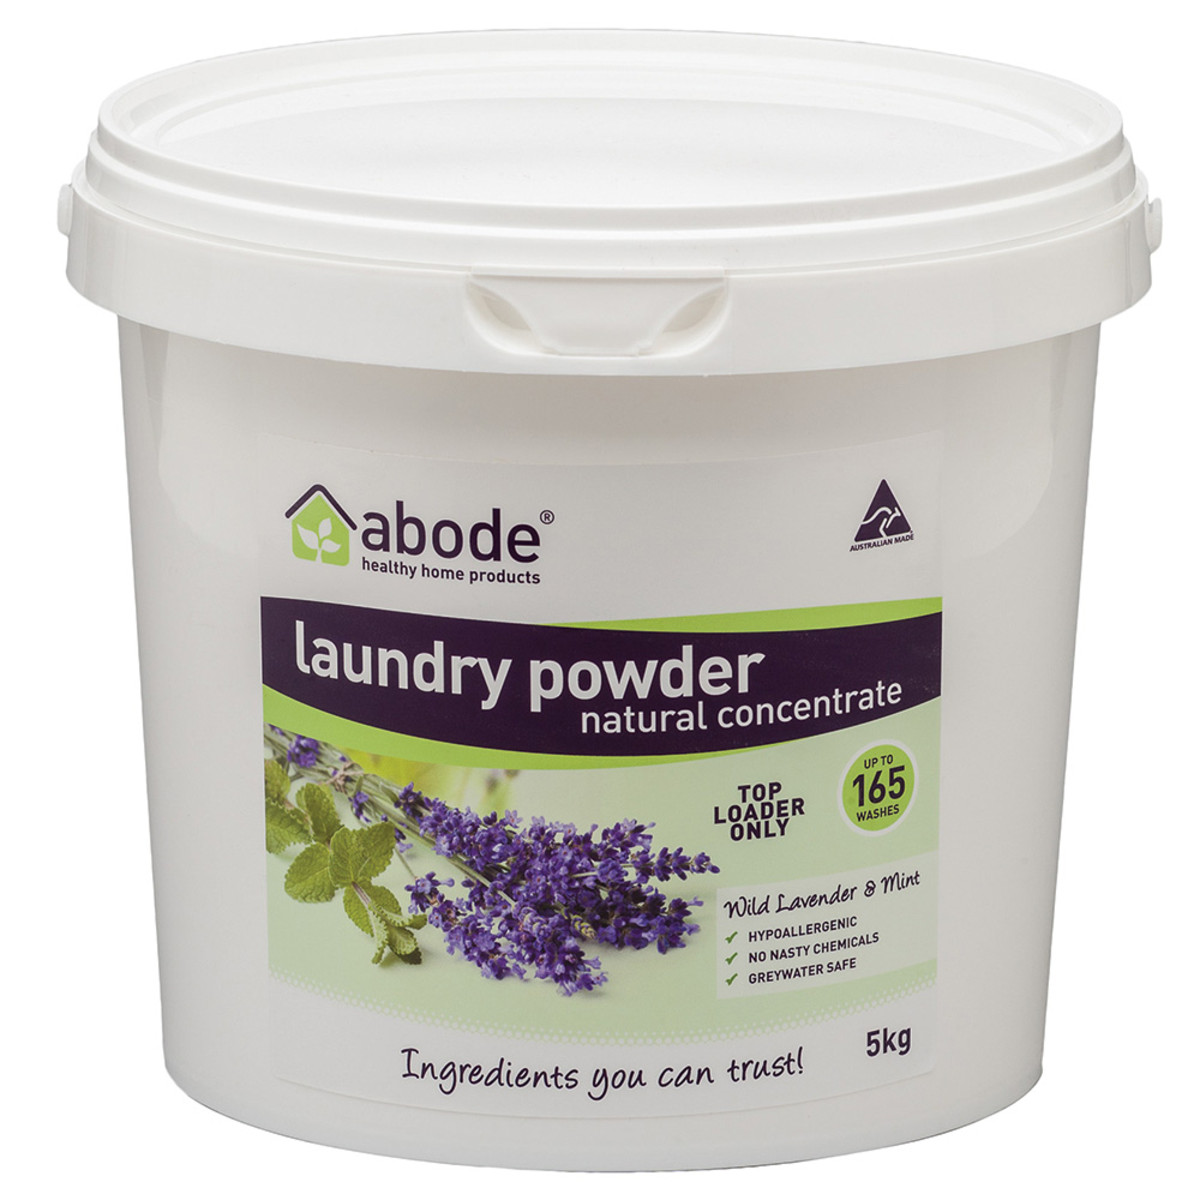 ABODE - Laundry Powder (Front & Top Loader) Wild Lavender & Mint 5kg Bucket